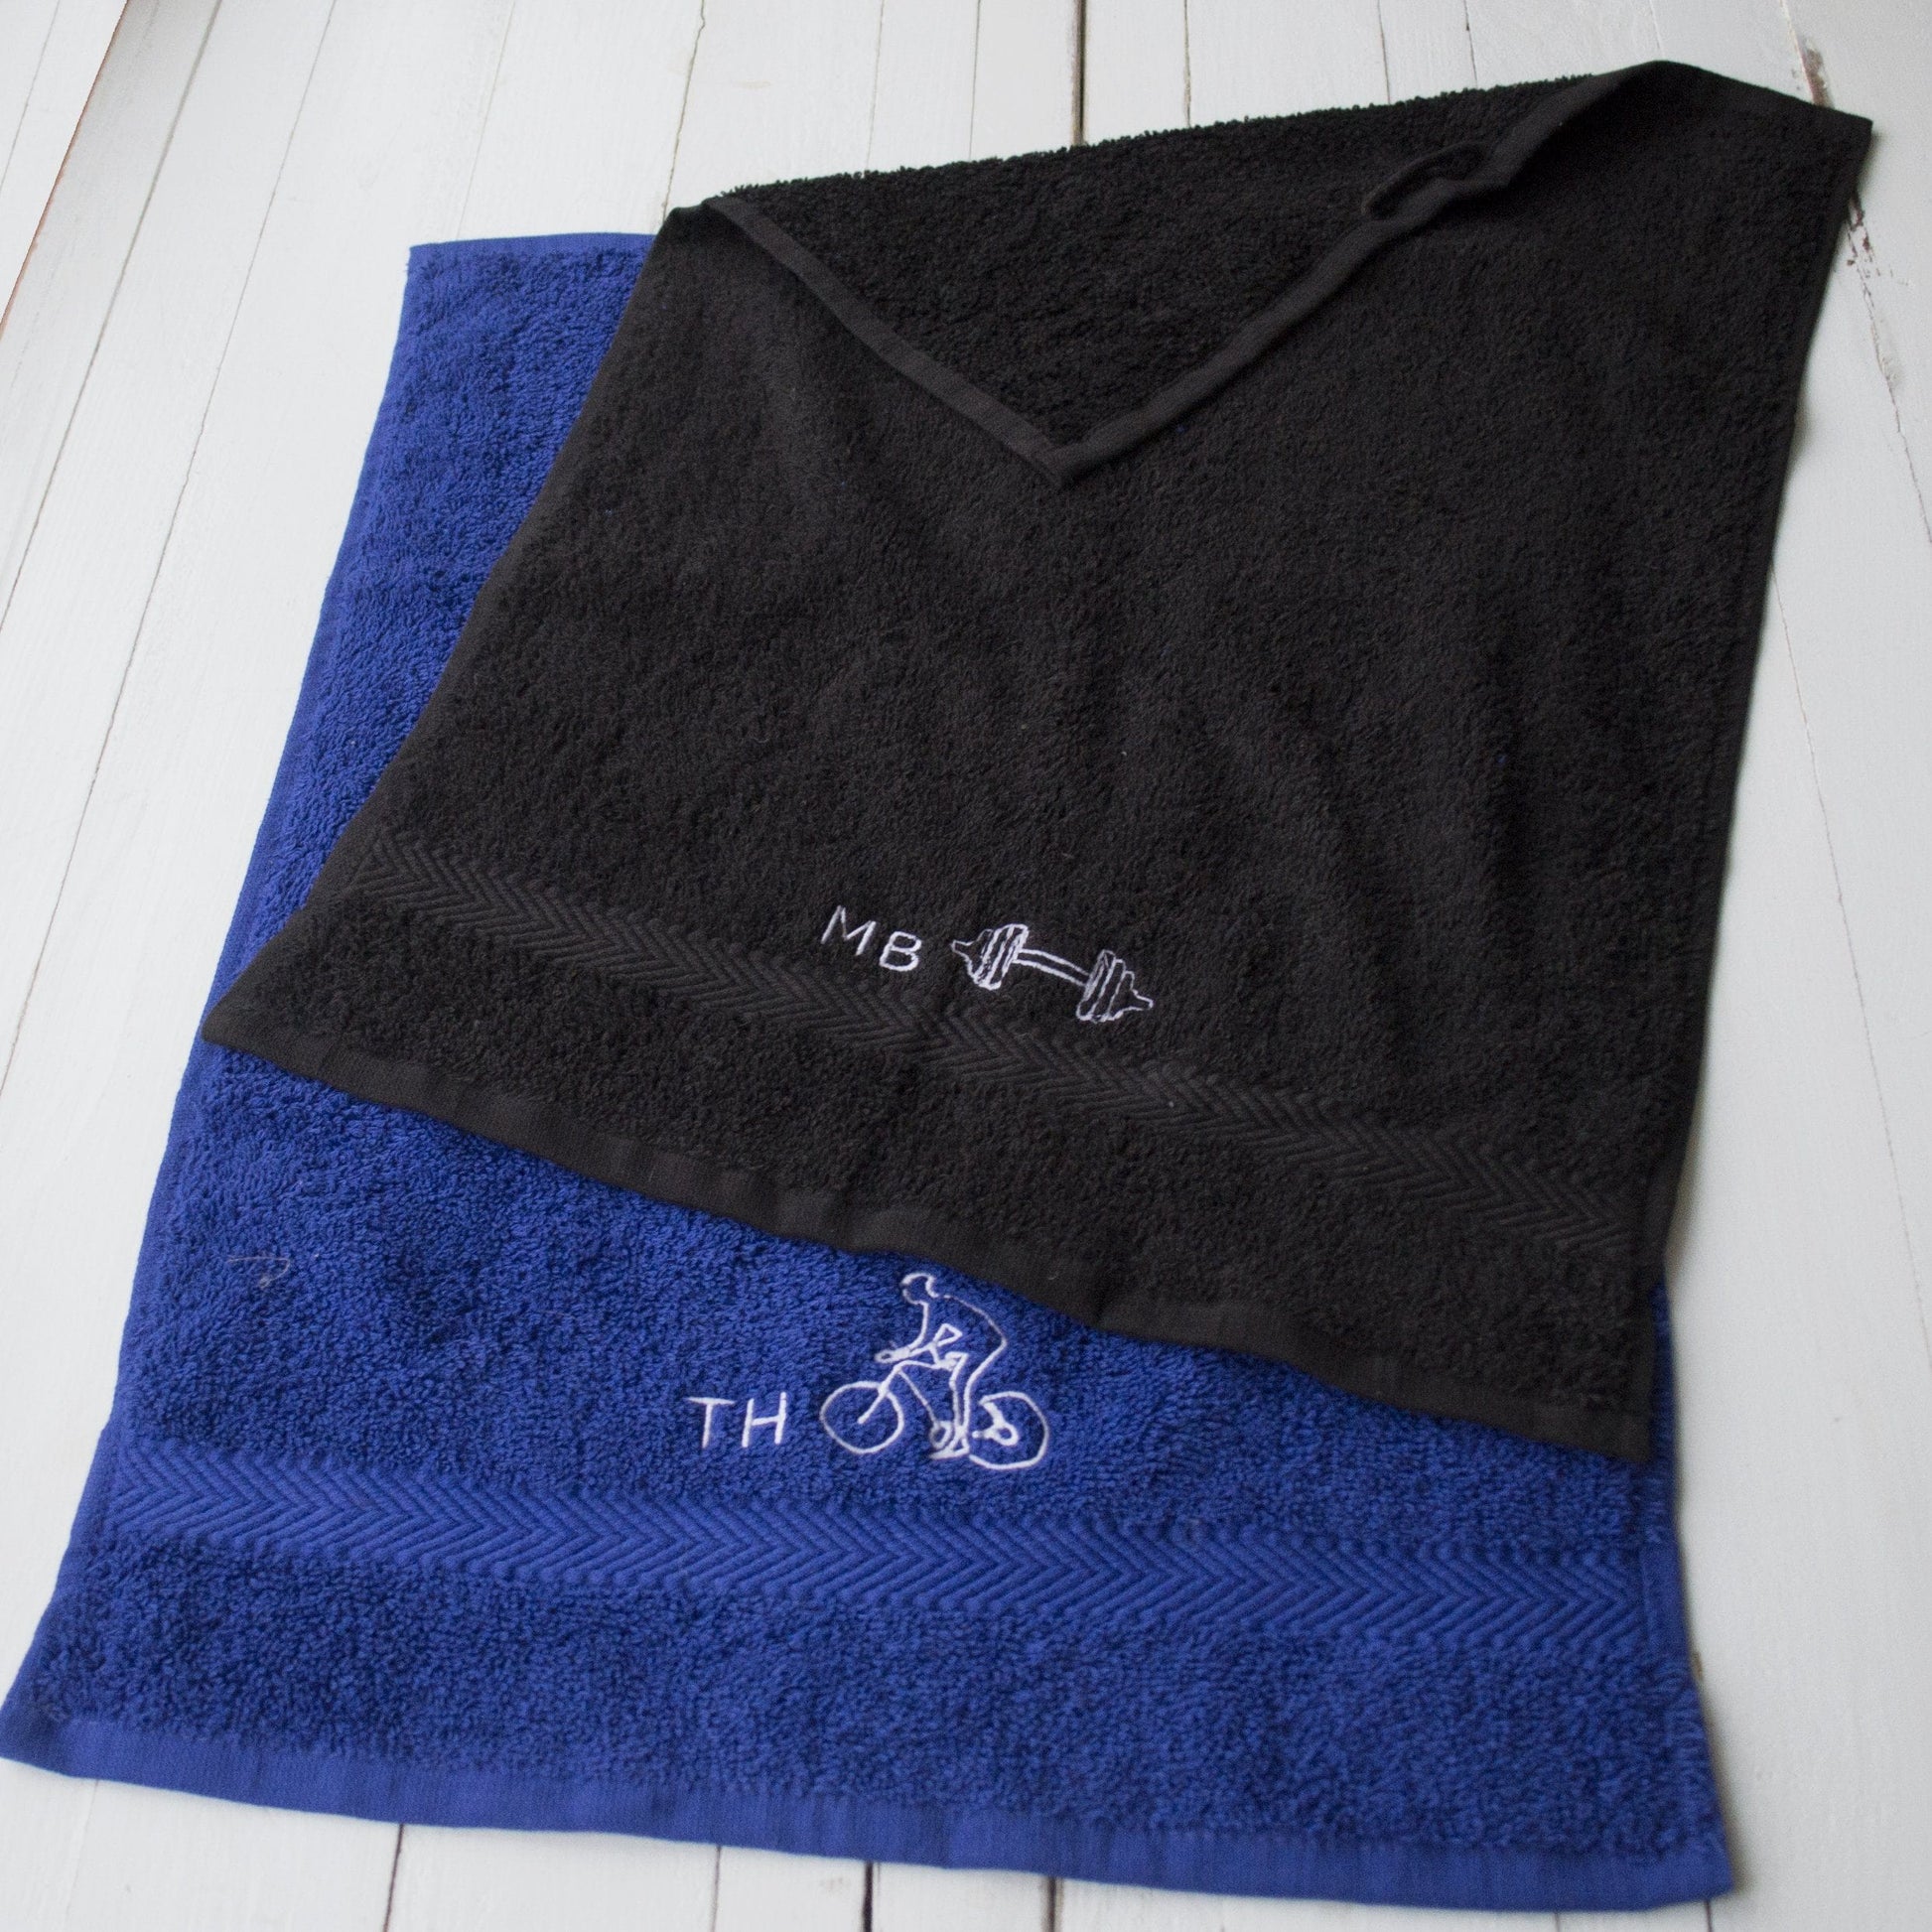 Personalised Sports Towel, Sport Towel, - ALPHS 